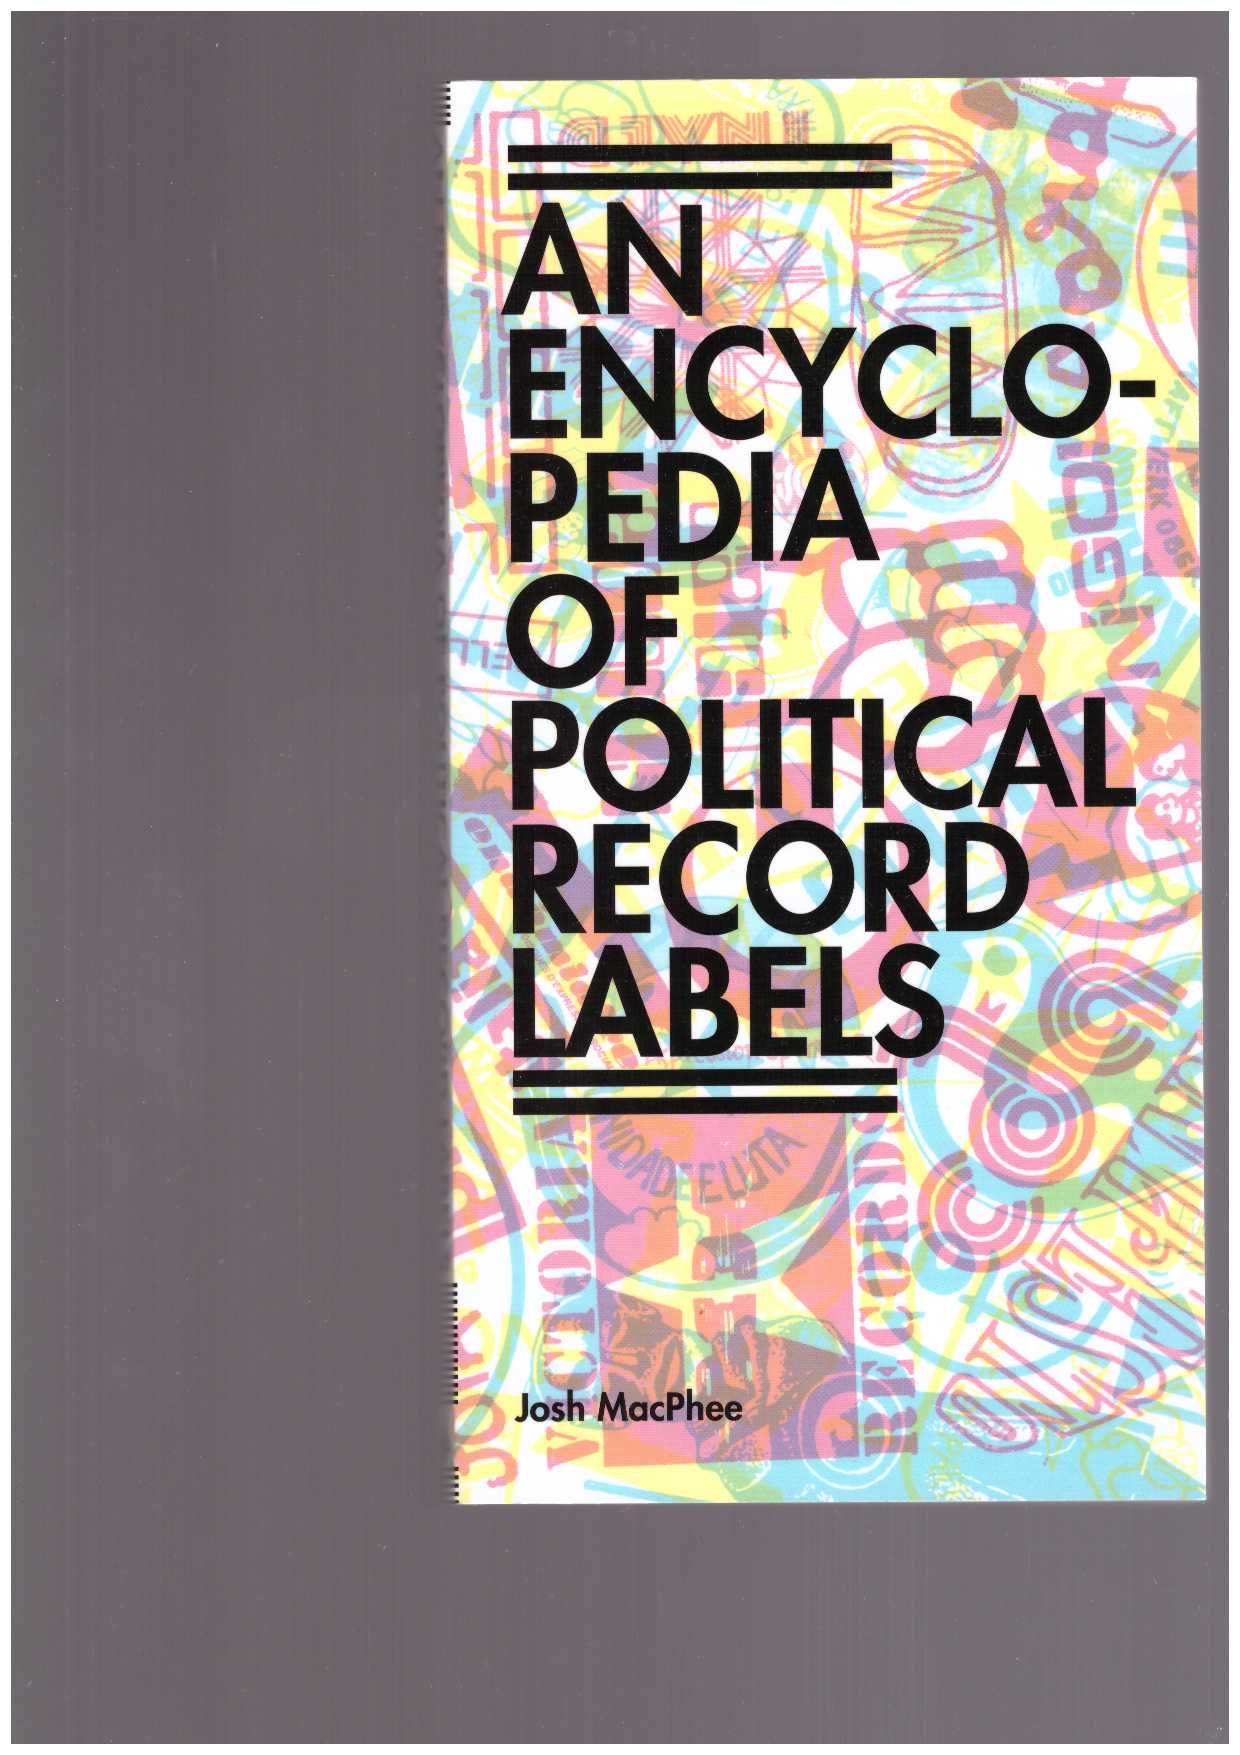 MACPHEE, Josh - An Encyclopedia of Political Record Labels